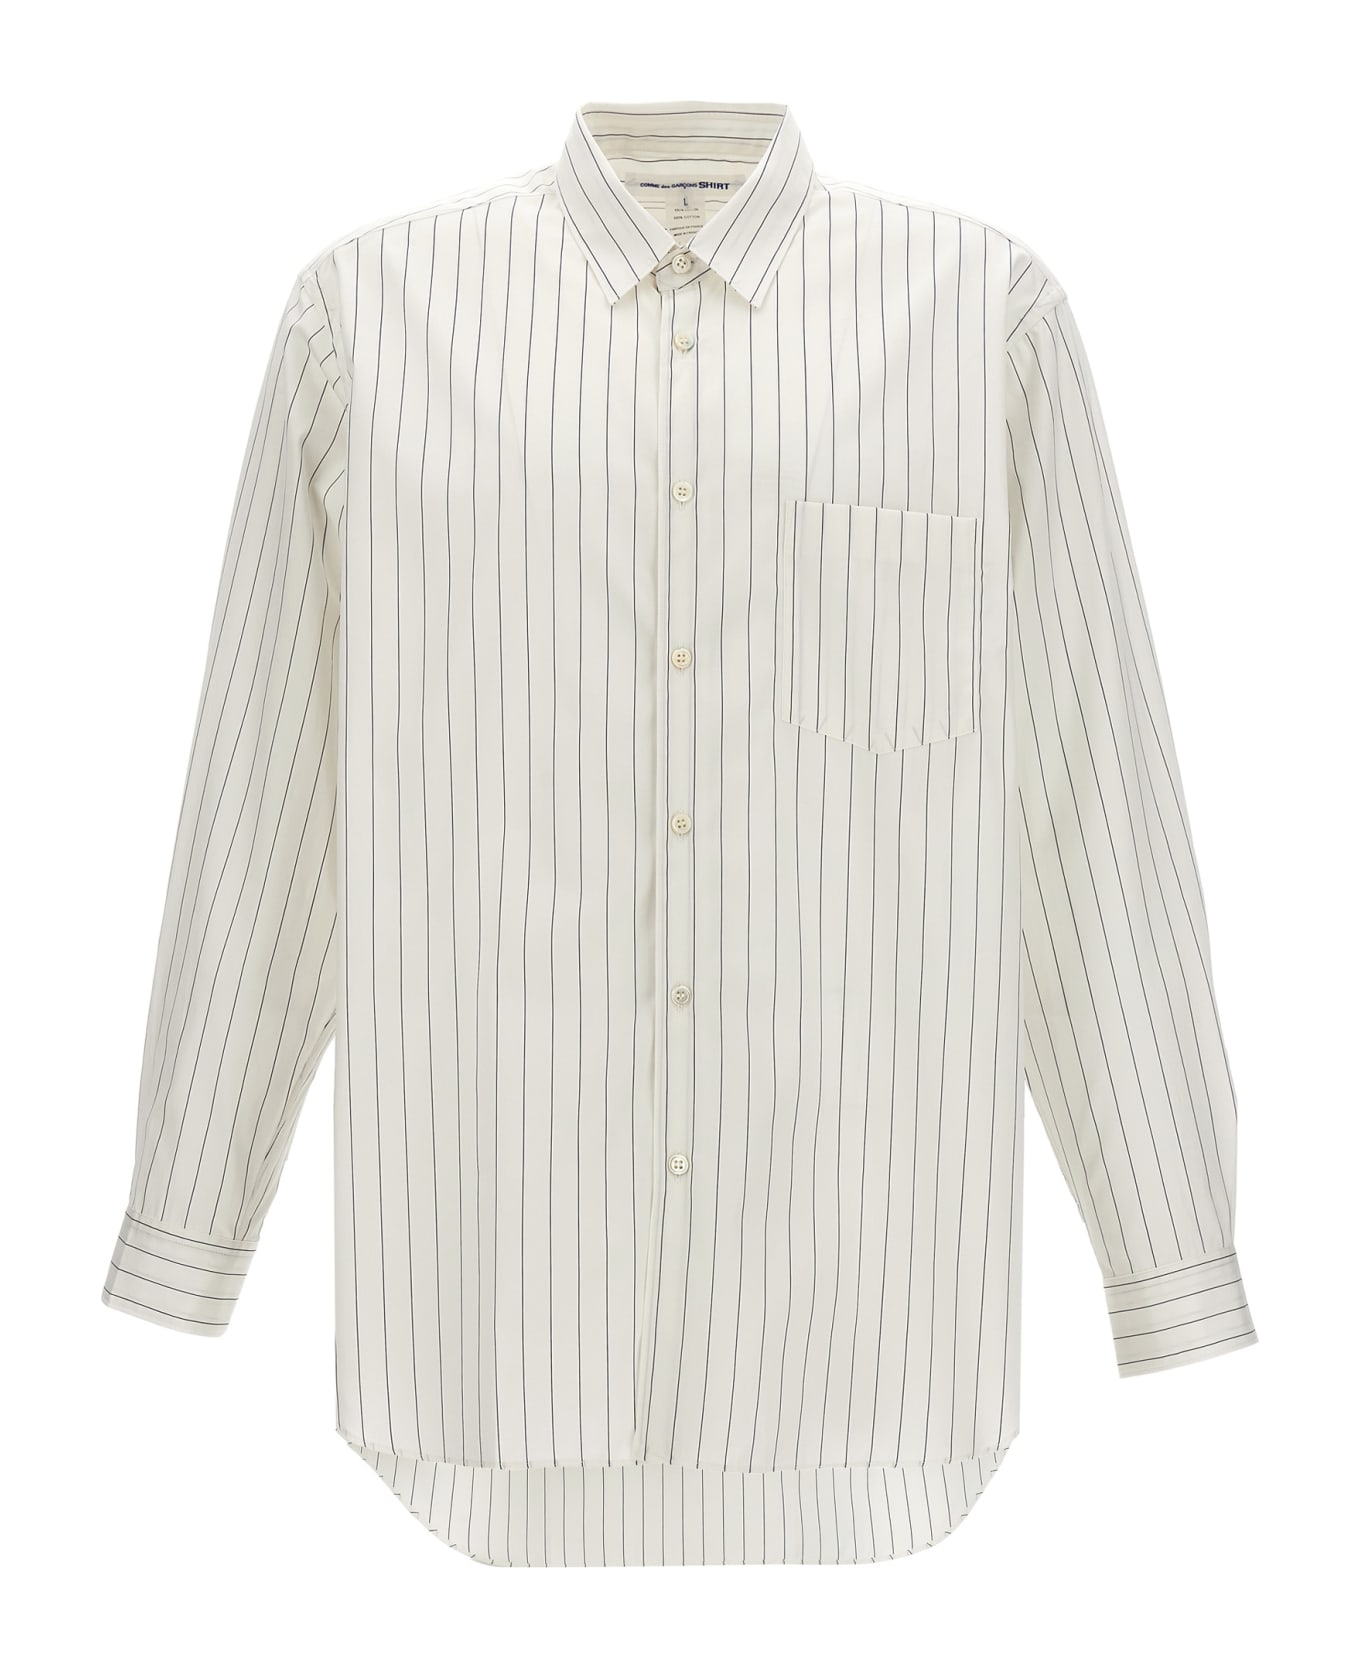 Comme des Garçons Shirt Striped Shirt - White/Black